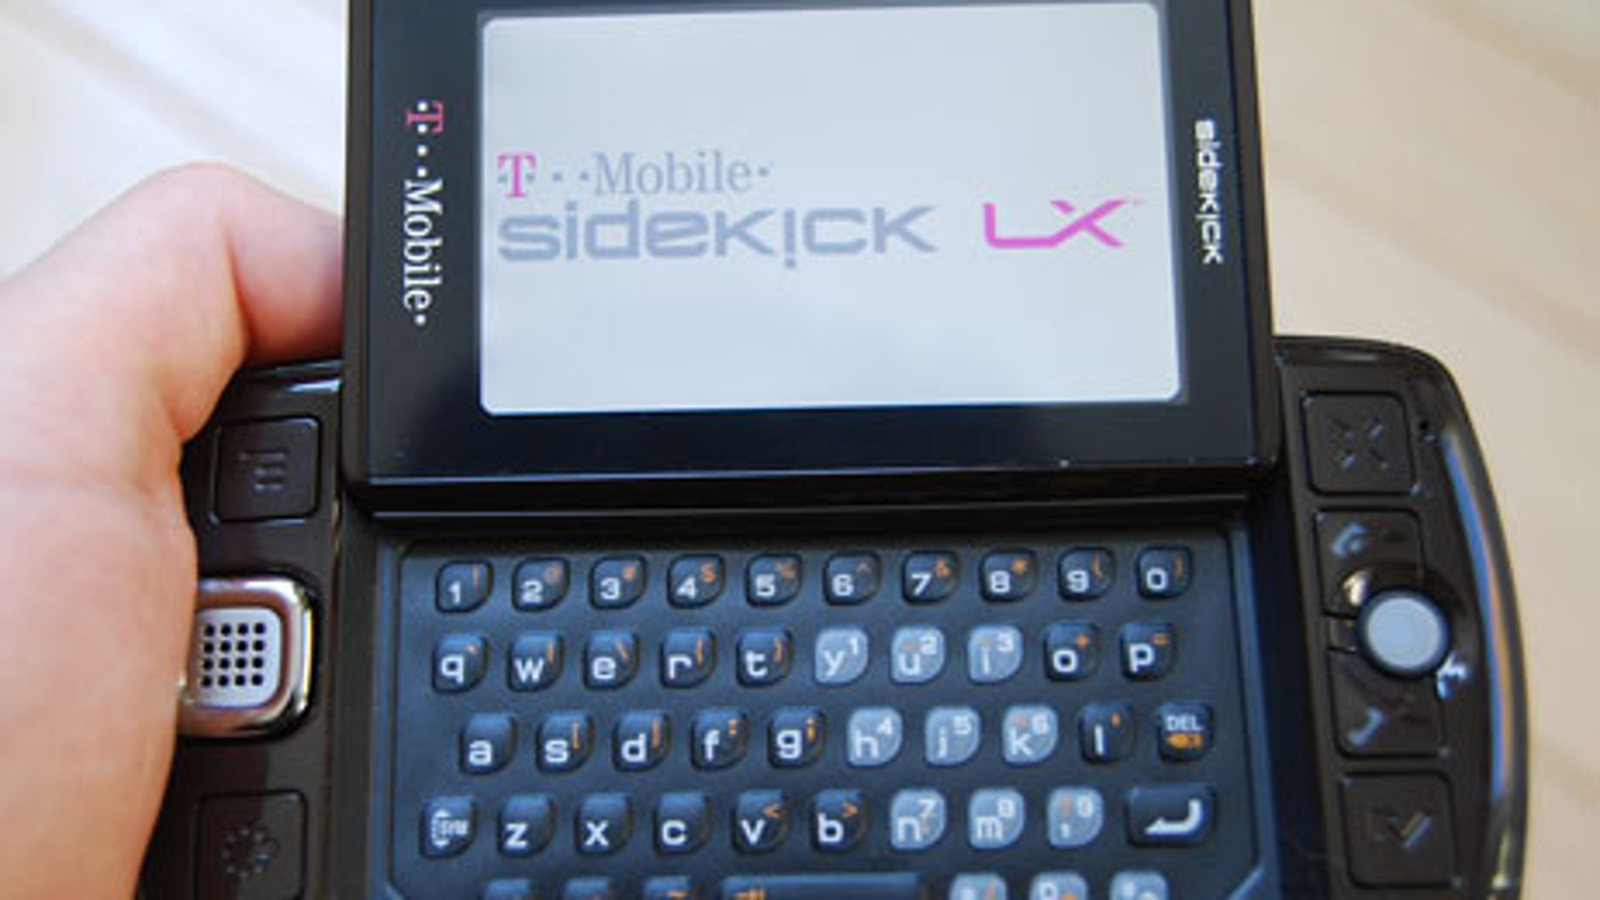 sidekick cell phone 1